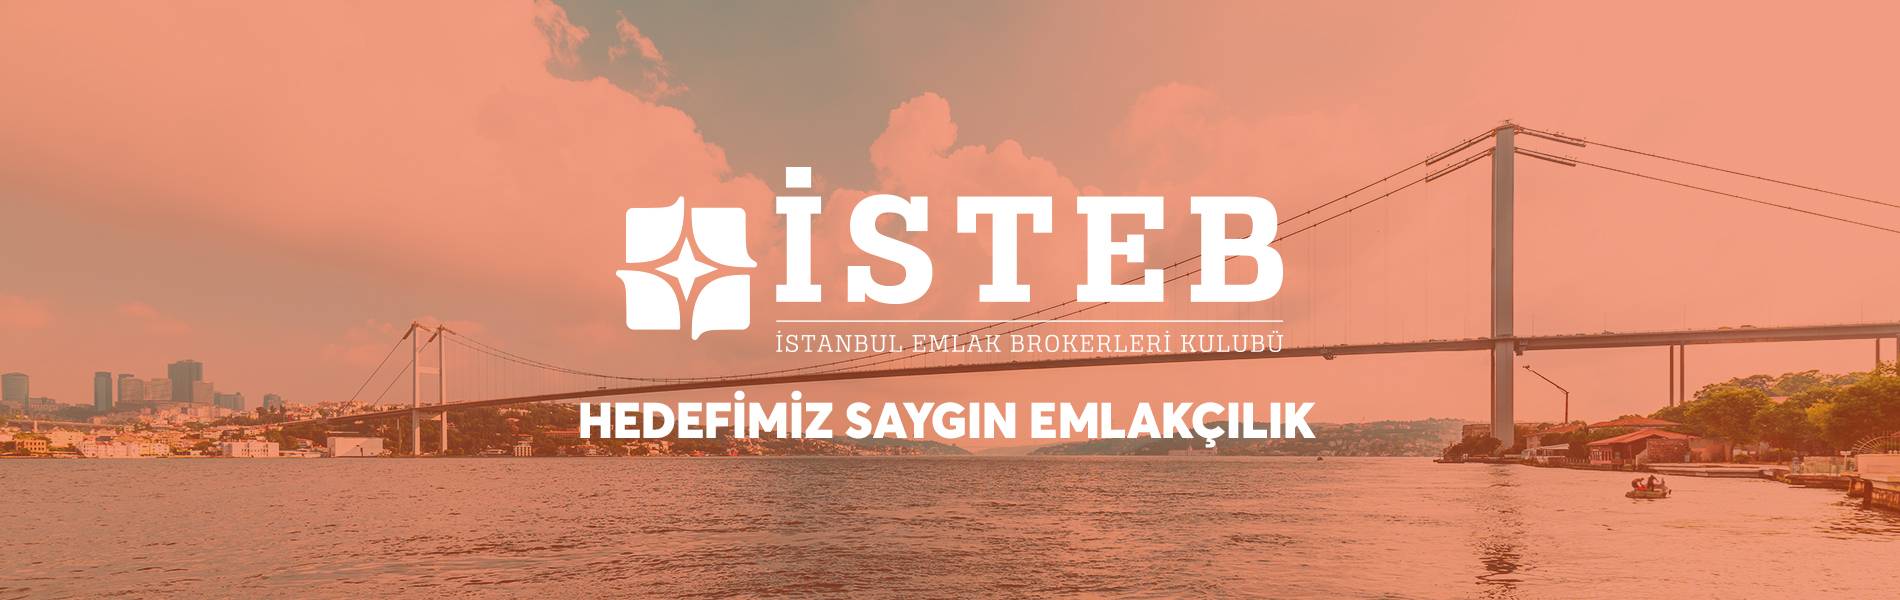 www.isteb.com.tr İSTEB İSTANBUL EMLAK BROKERLERİ KULUBÜ